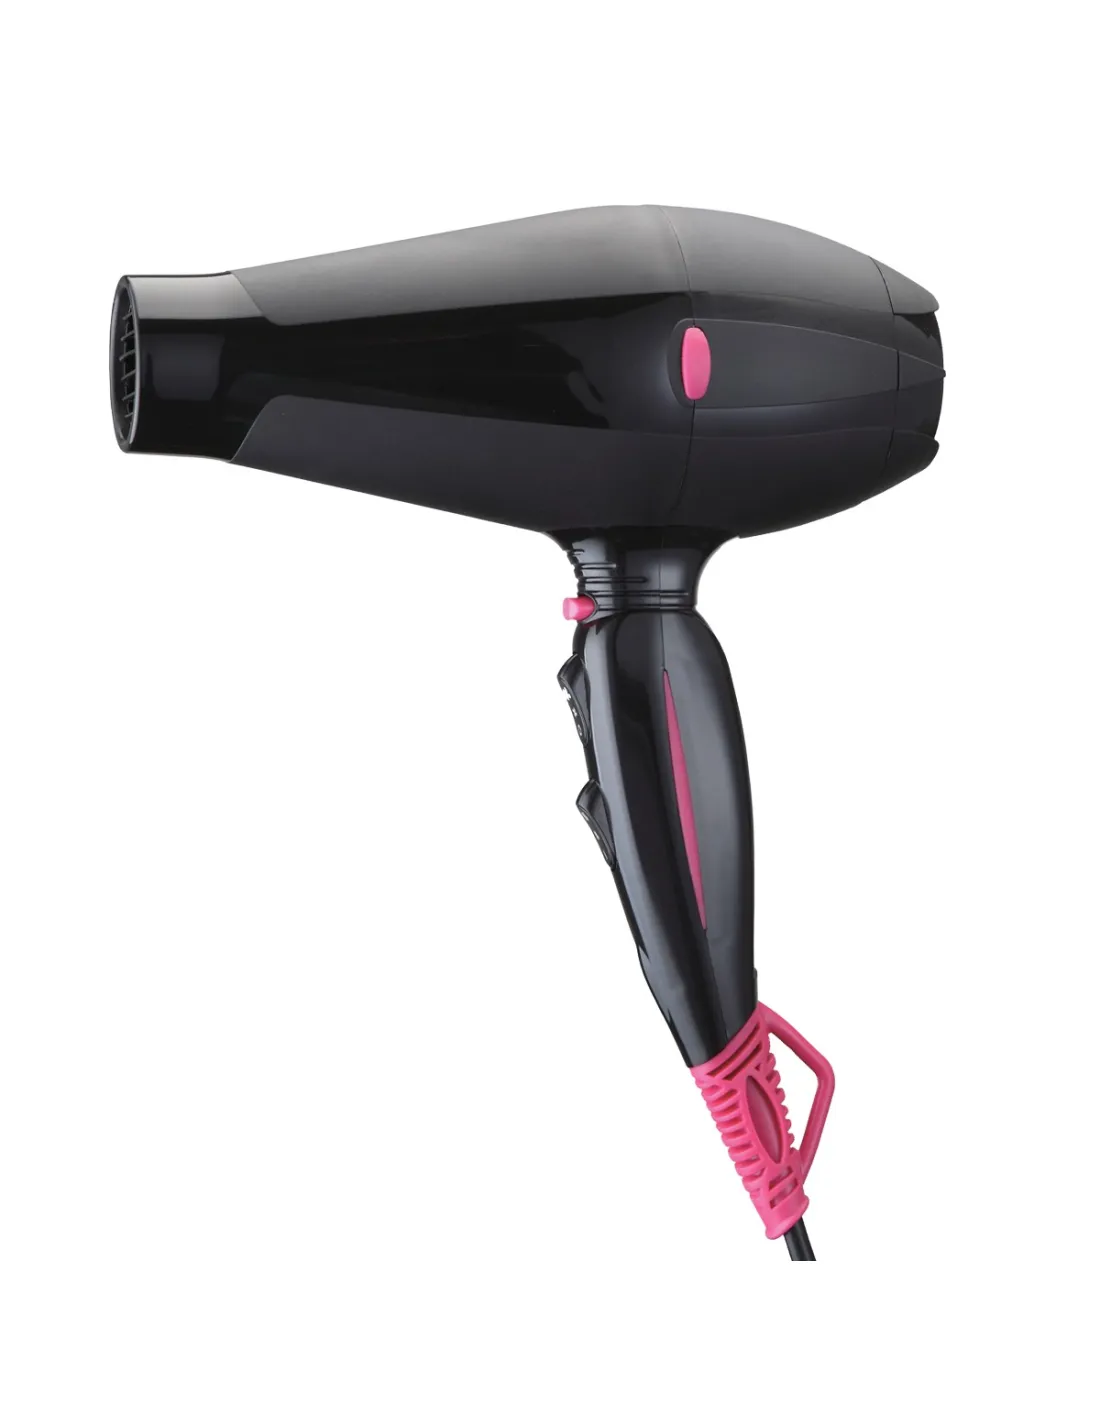 Фен hair Dryer Pink. Фен Redmond Ionic professional 2000w. Max Pro Neo Hairdryer. 850 W фен.